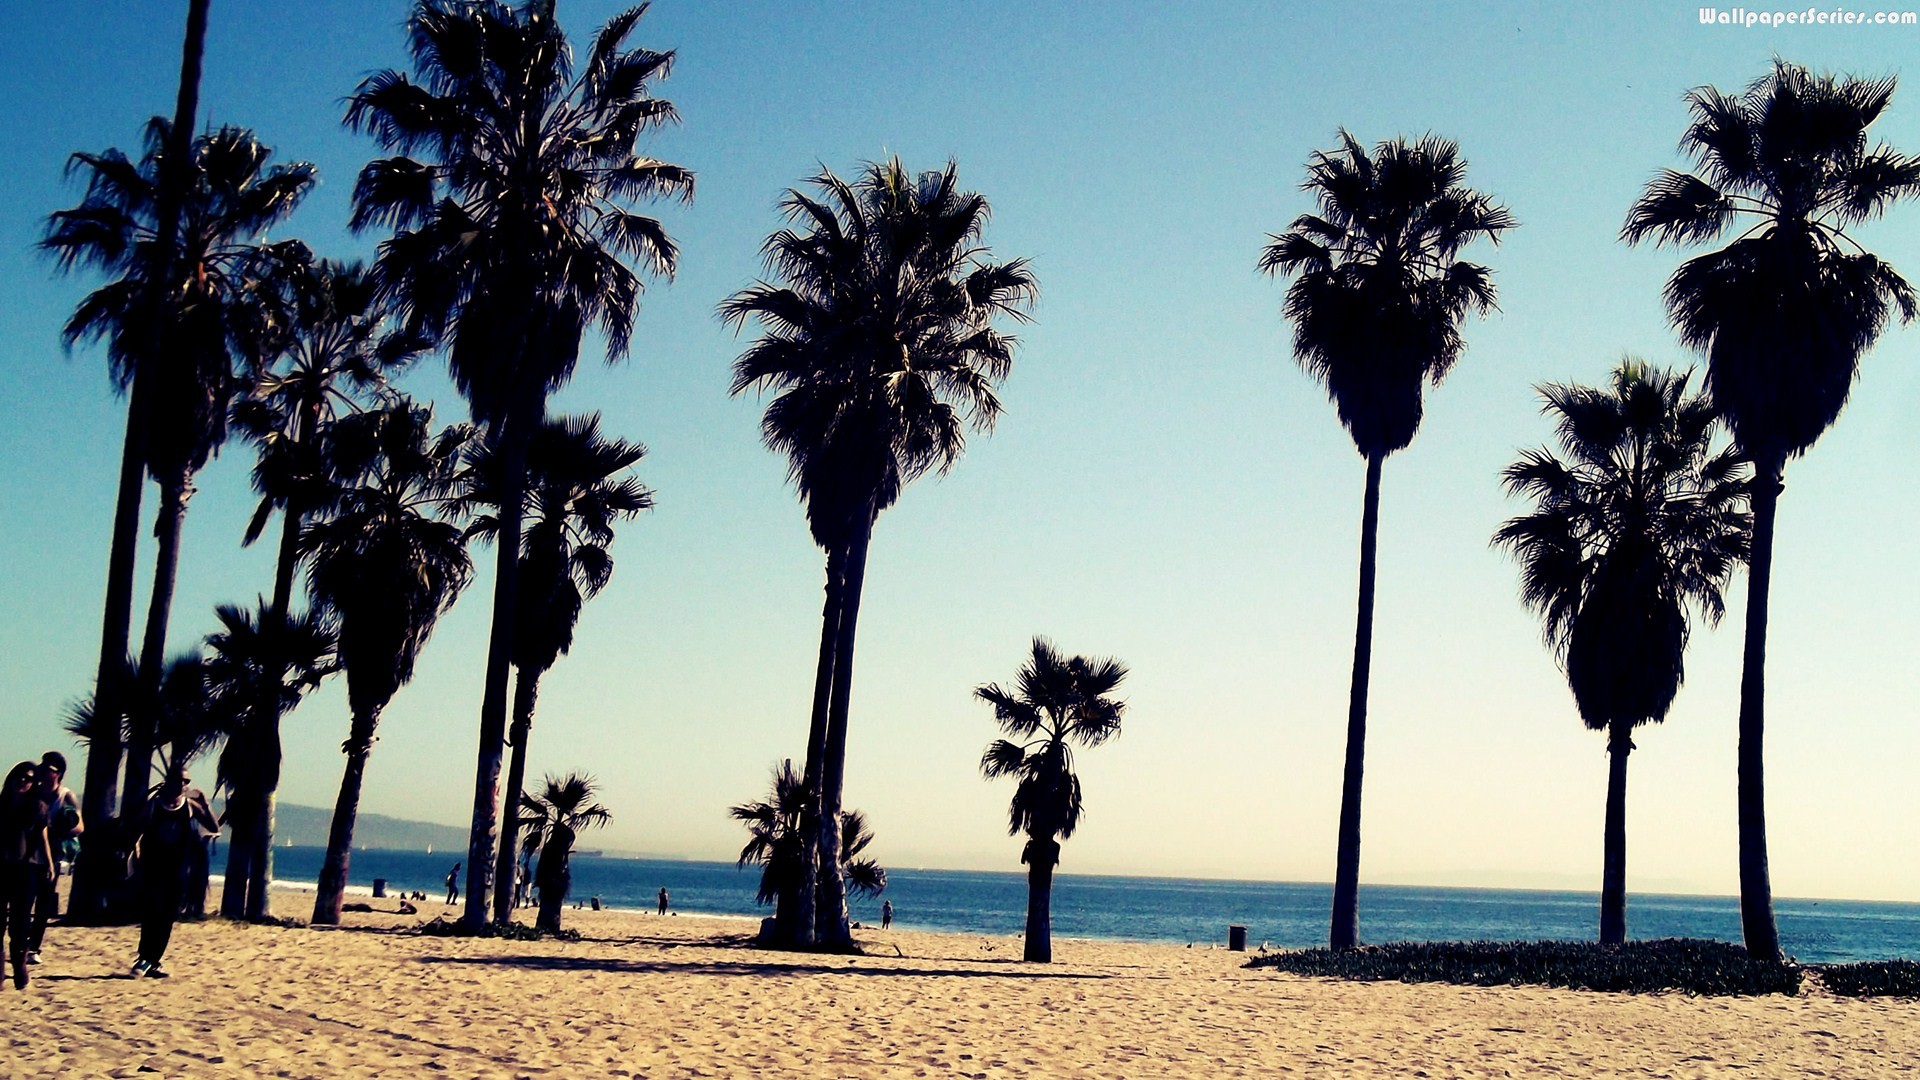 The Beach In California, On The Desktop John Carter, - Venice Beach Background - HD Wallpaper 